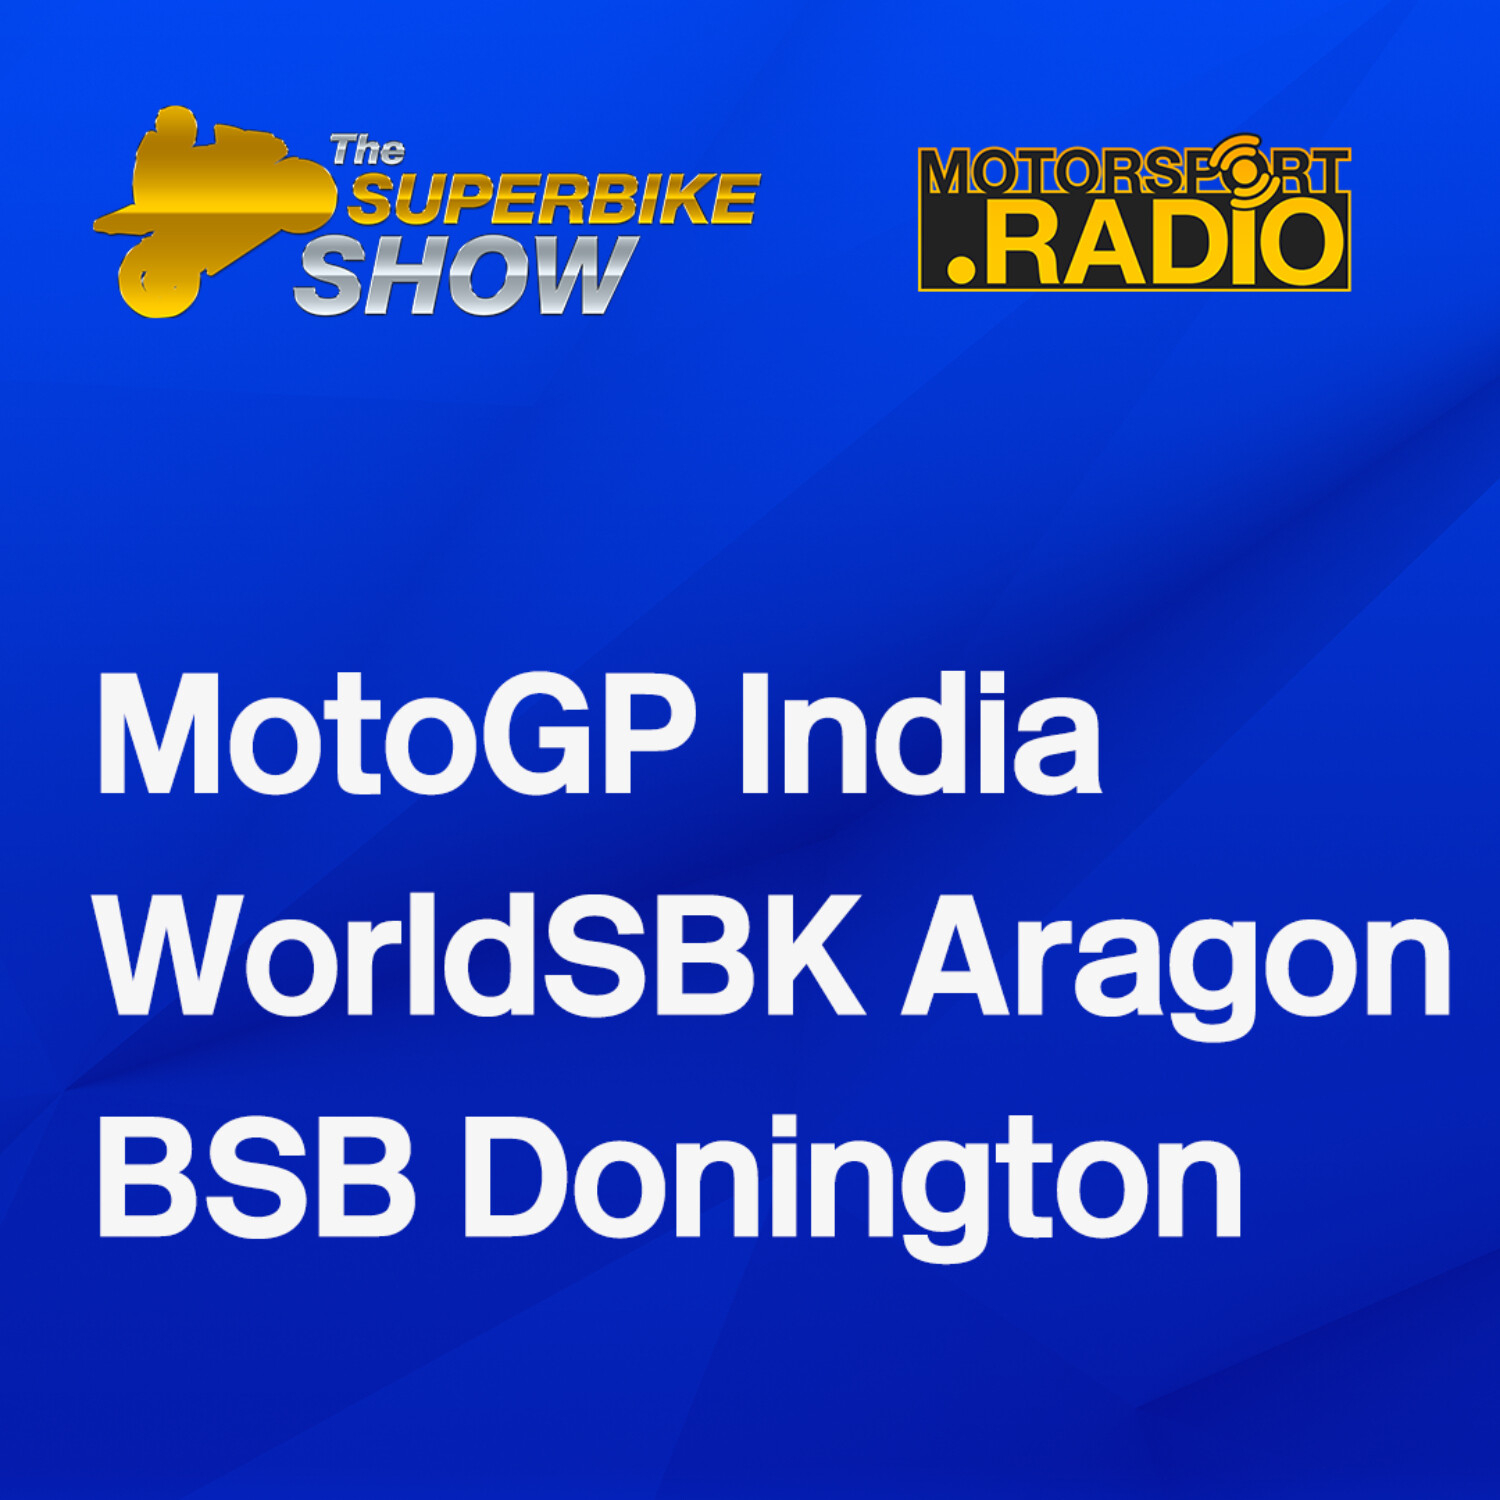 The Superbike Show - #MotoGP India #WorldSBK Aragon #BSB Donington